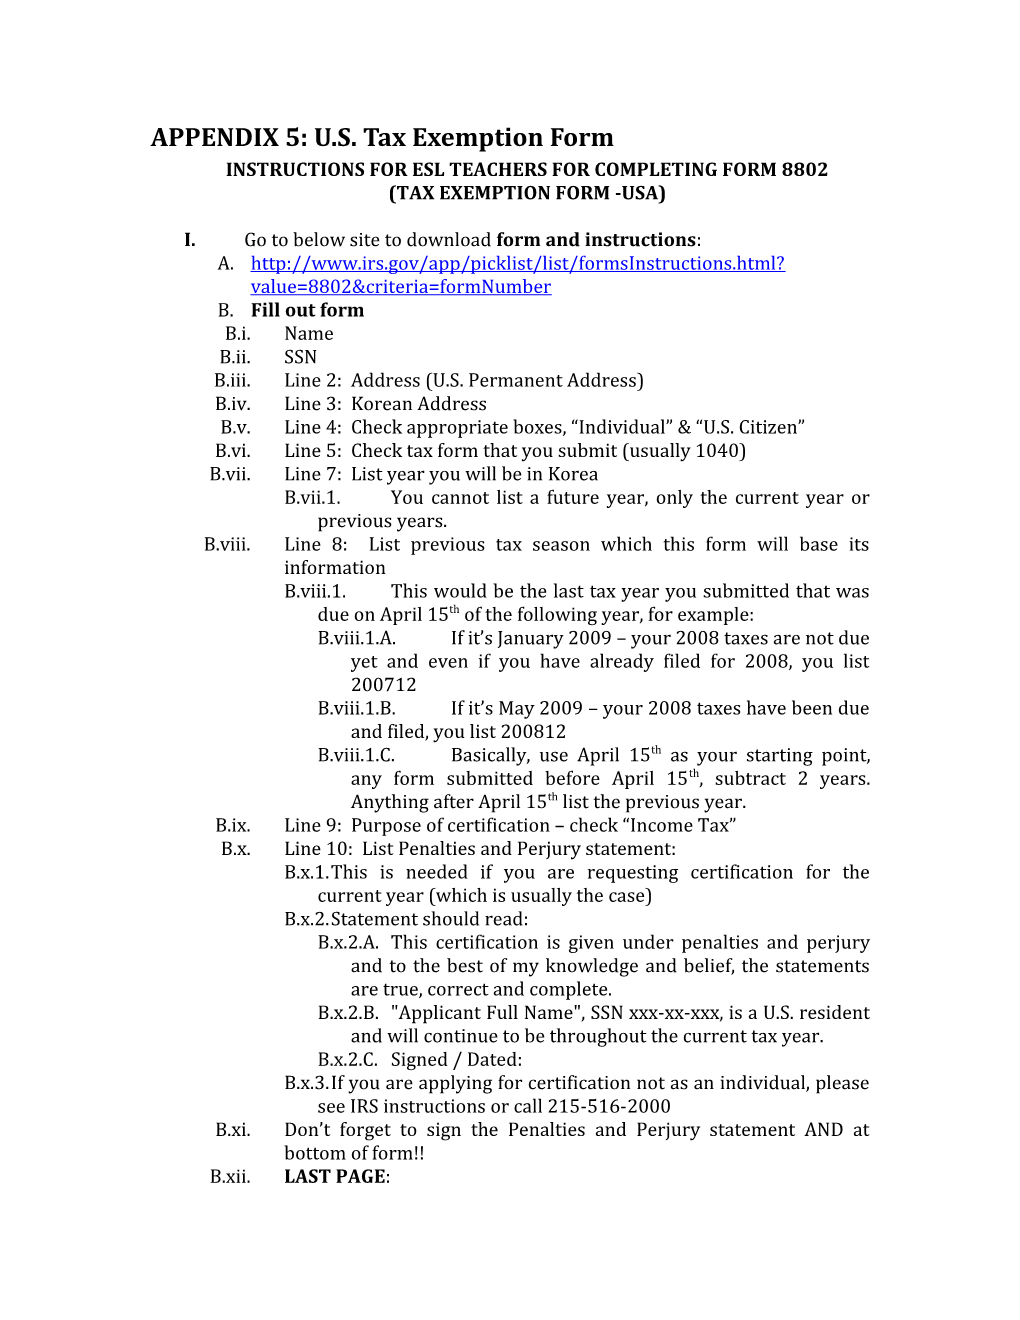 Instructions for Esl Teachers for Completing Form 8802